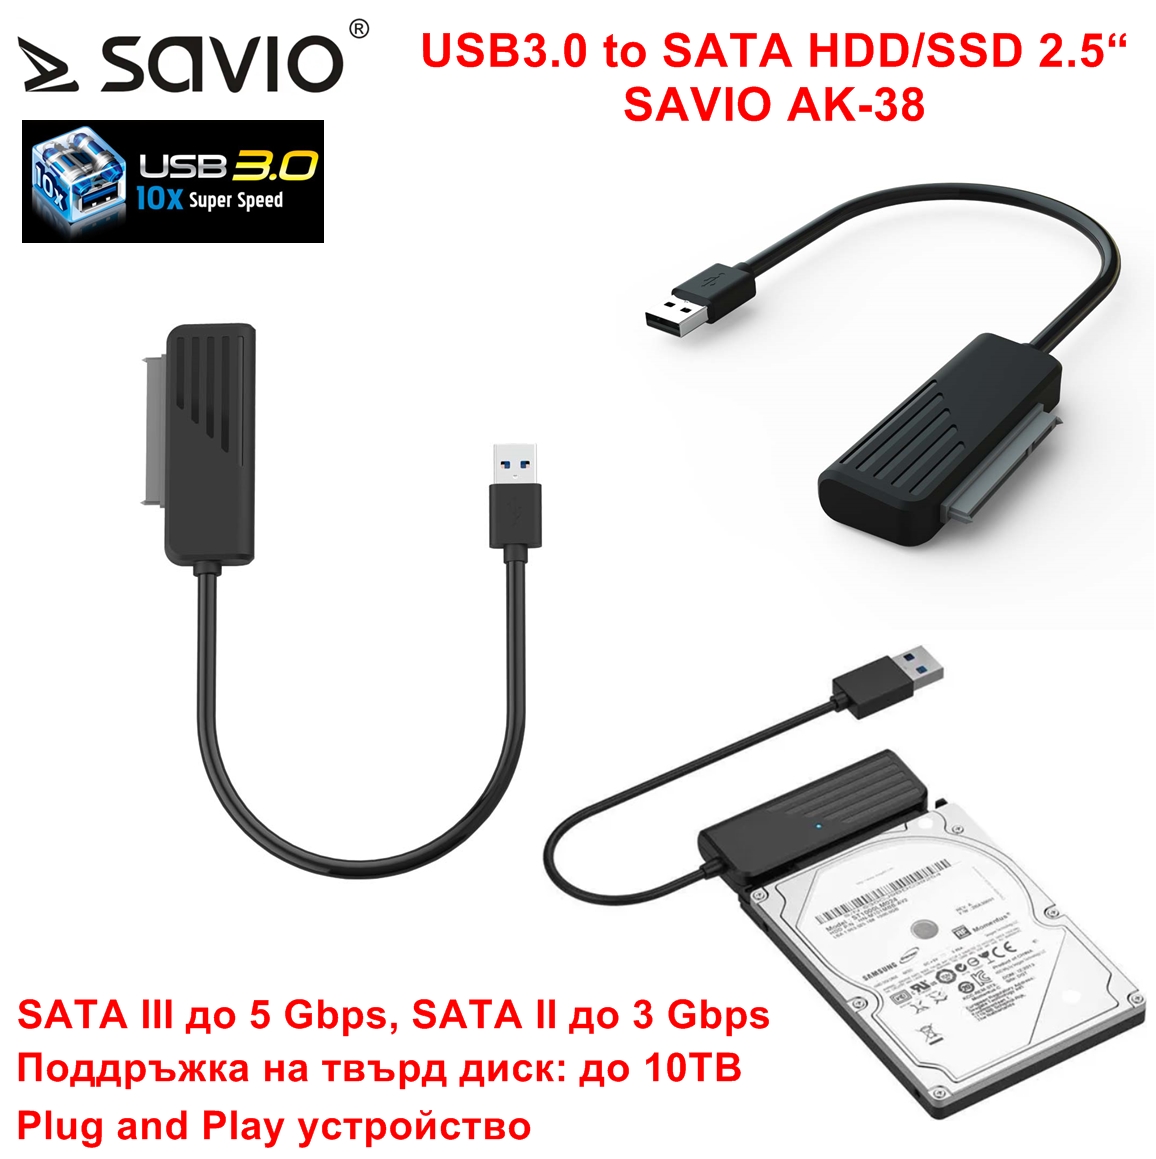 USB 3.0 to SATA HDD/SSD 2.5“ SAVIO AK-38